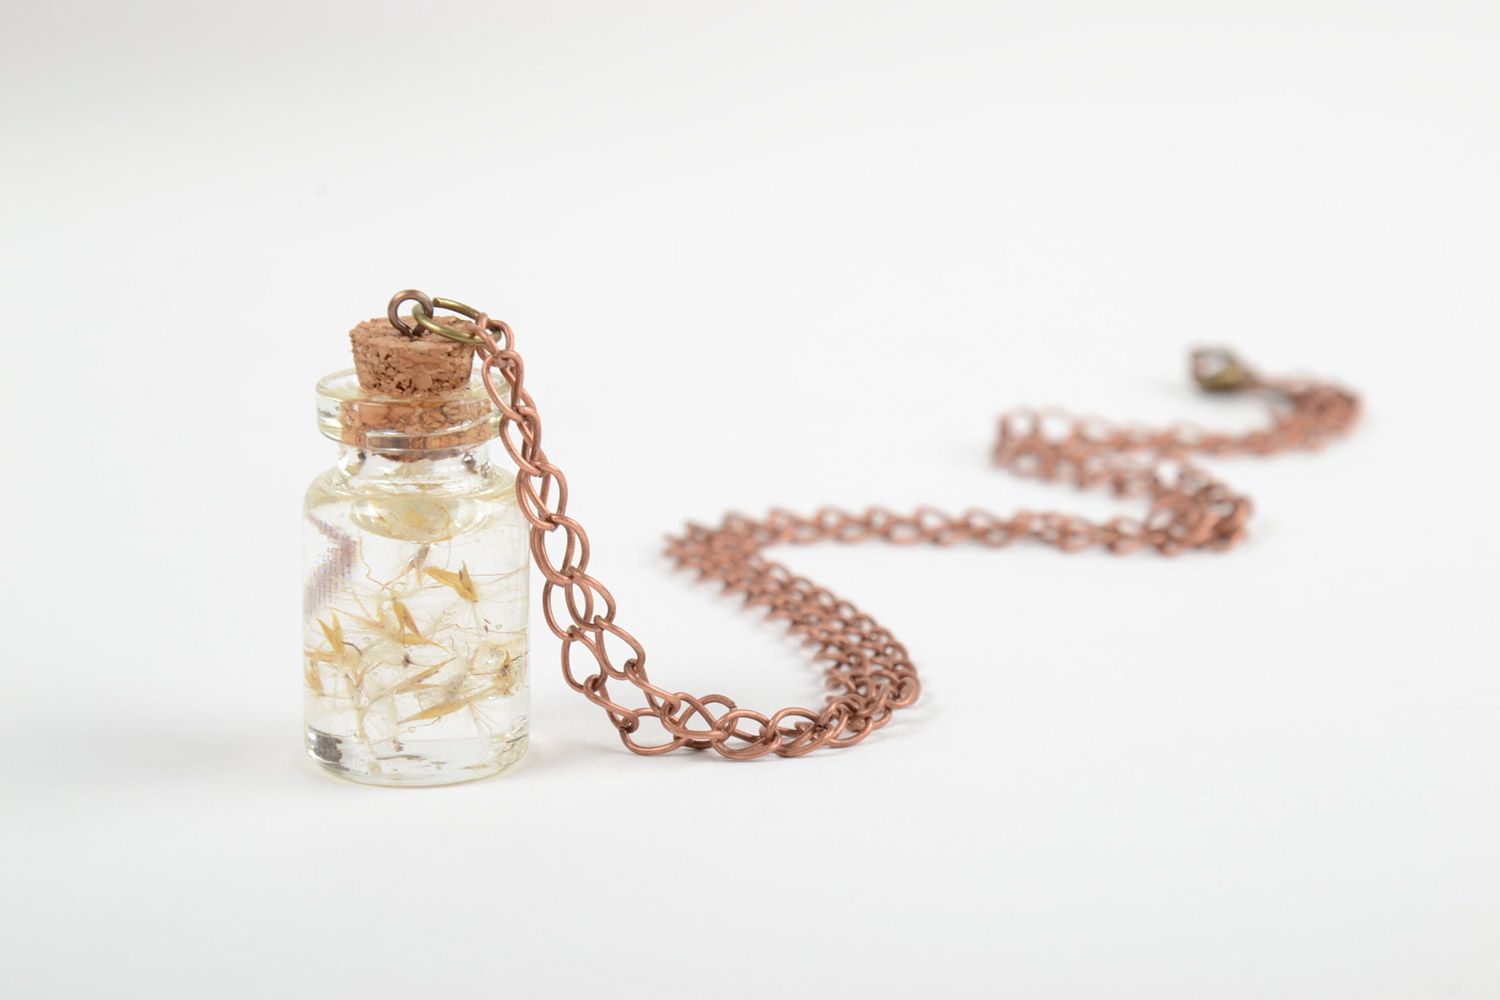 Handmade glass vial pendant with flowers in epoxy resin inside Dandelions photo 4